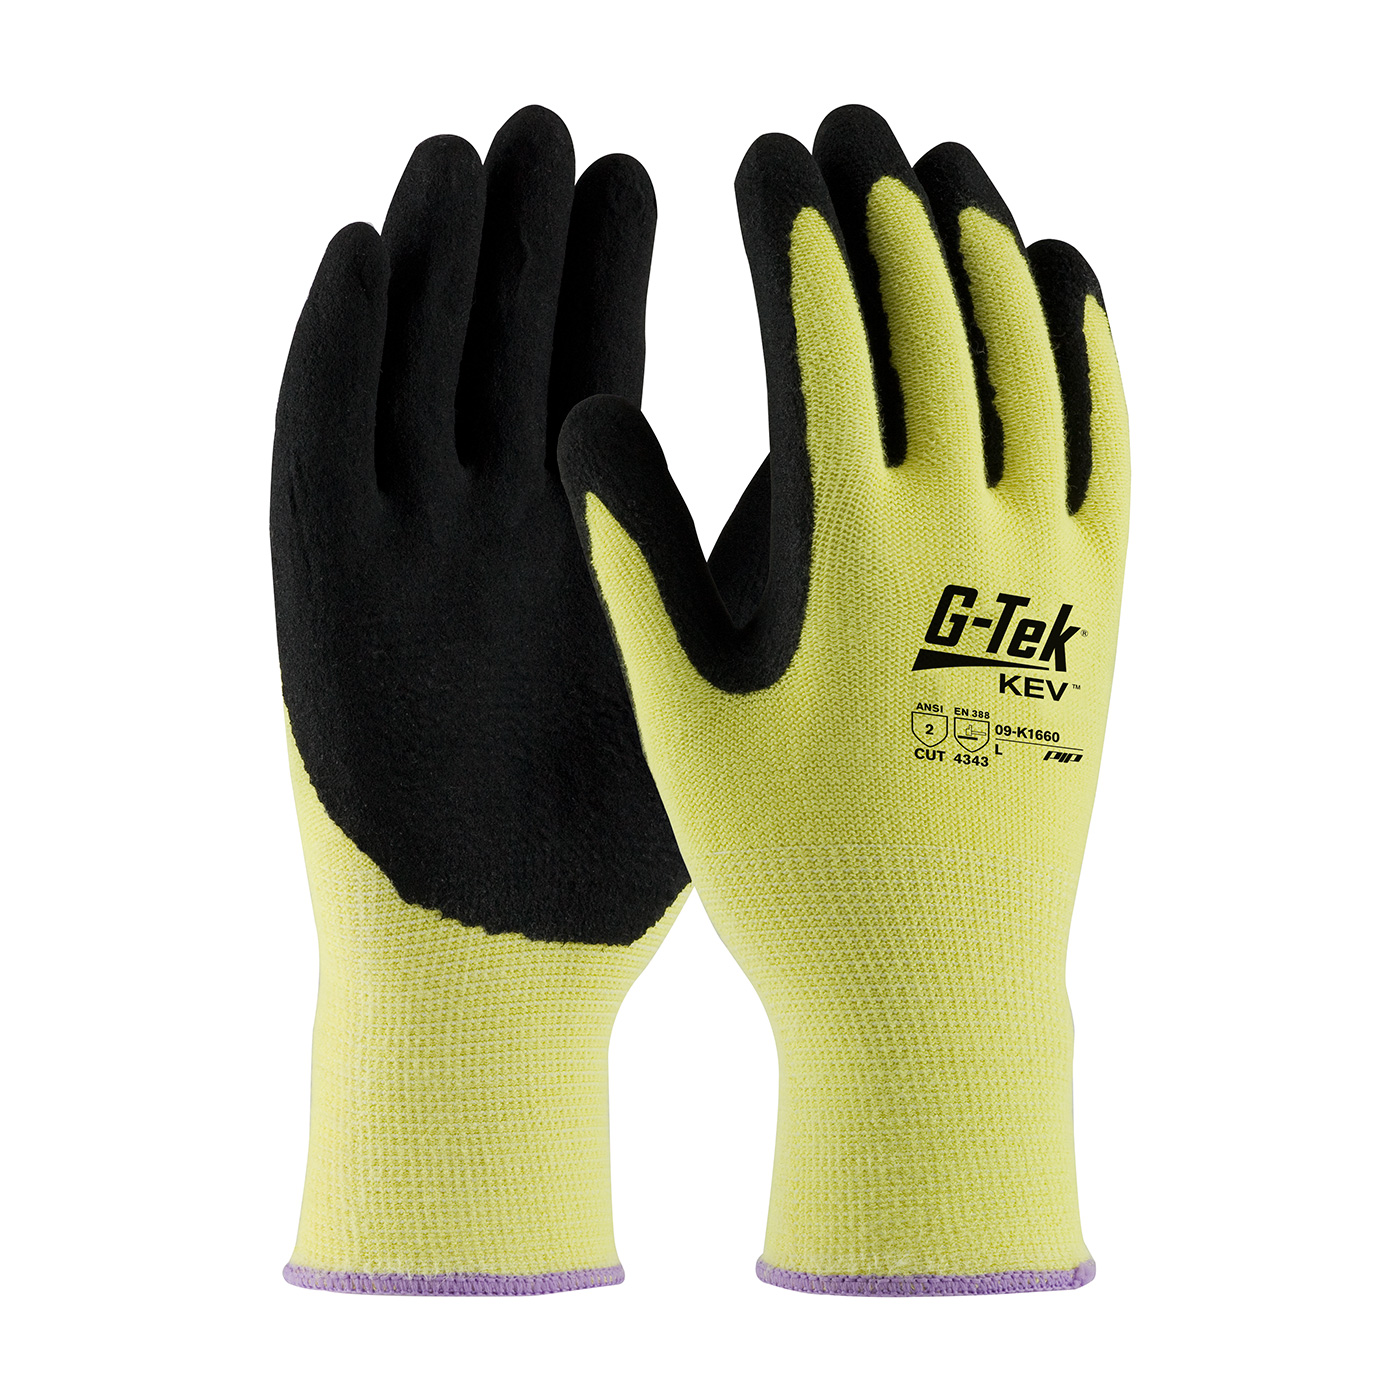 09-K1660 G-Tek™ KEV 13 gauge Kevlar knit gloves with MicroSurface nitrile grip